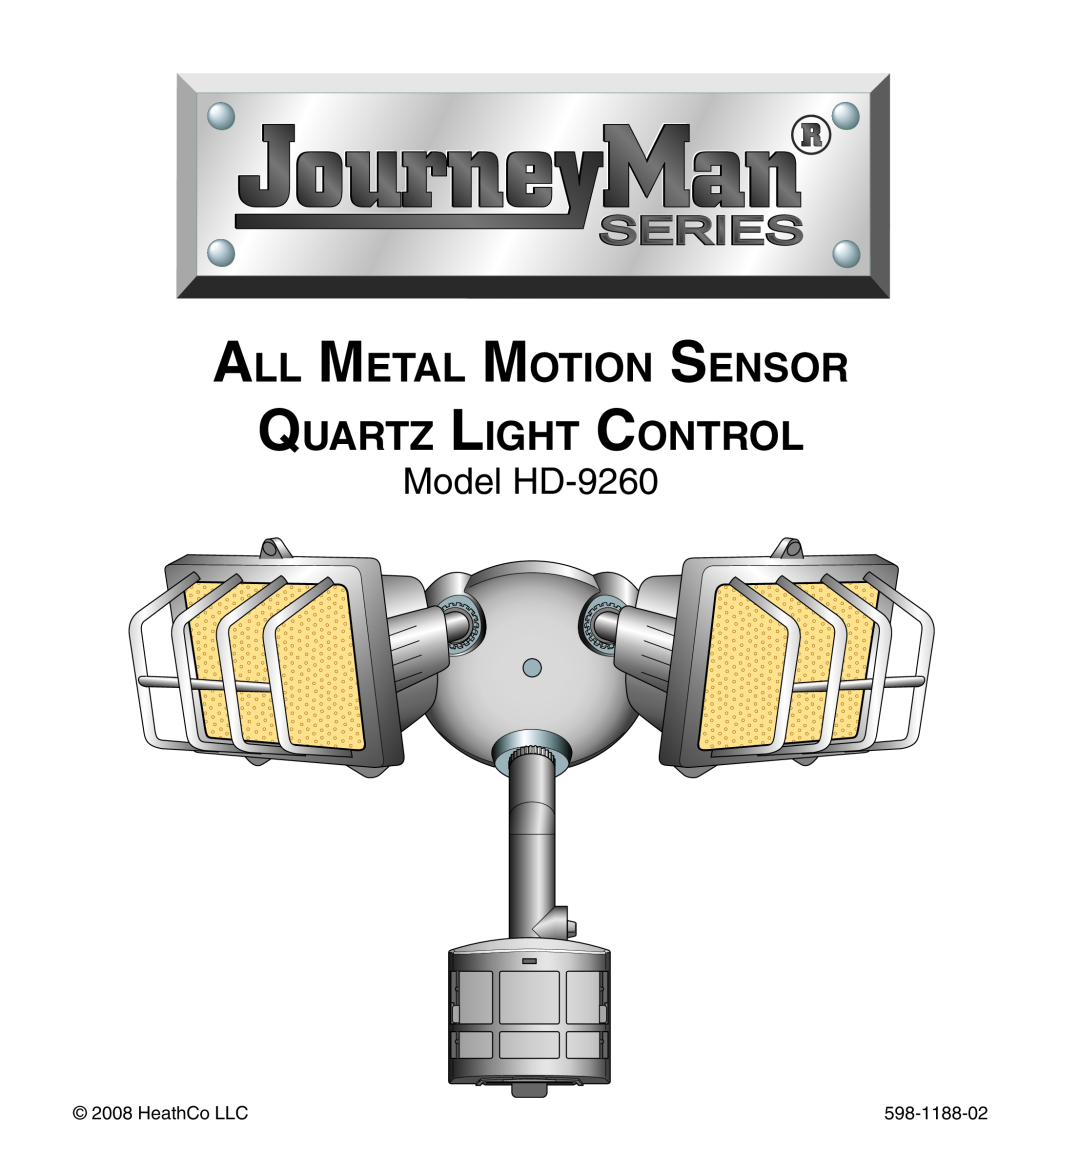 Heath Zenith manual All Metal Motion Sensor, Quartz Light Control, Model HD-9260, HeathCo LLC, 598-1188-02 